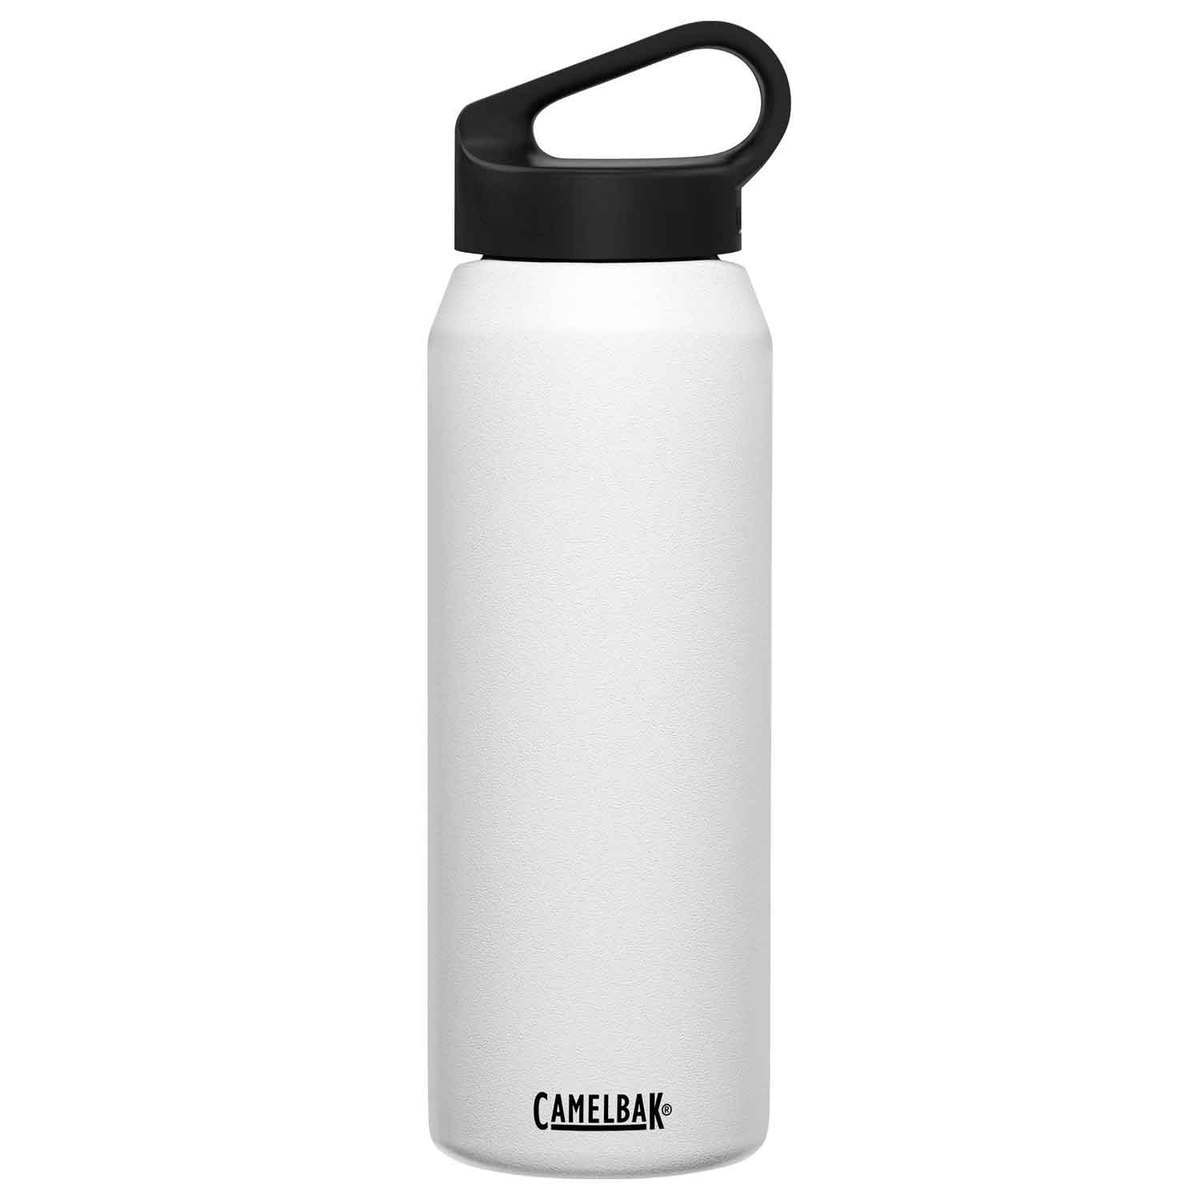 https://www.sportsmans.com/medias/camelbak-carry-cap-32oz-insulated-bottle-white-1648168-1.jpg?context=bWFzdGVyfGltYWdlc3wzMjY5NHxpbWFnZS9qcGVnfGltYWdlcy9oOGYvaGUwLzkzNTY1Mjg1ODI2ODYuanBnfGZiOTlkOGRmYmJhNWZmNGI4MjUyNTI3ZWVkYTE5ZmRkODhjNDk2YjY2ODJhM2ViY2FjNTI3ODNiMWE1NGNiMzA